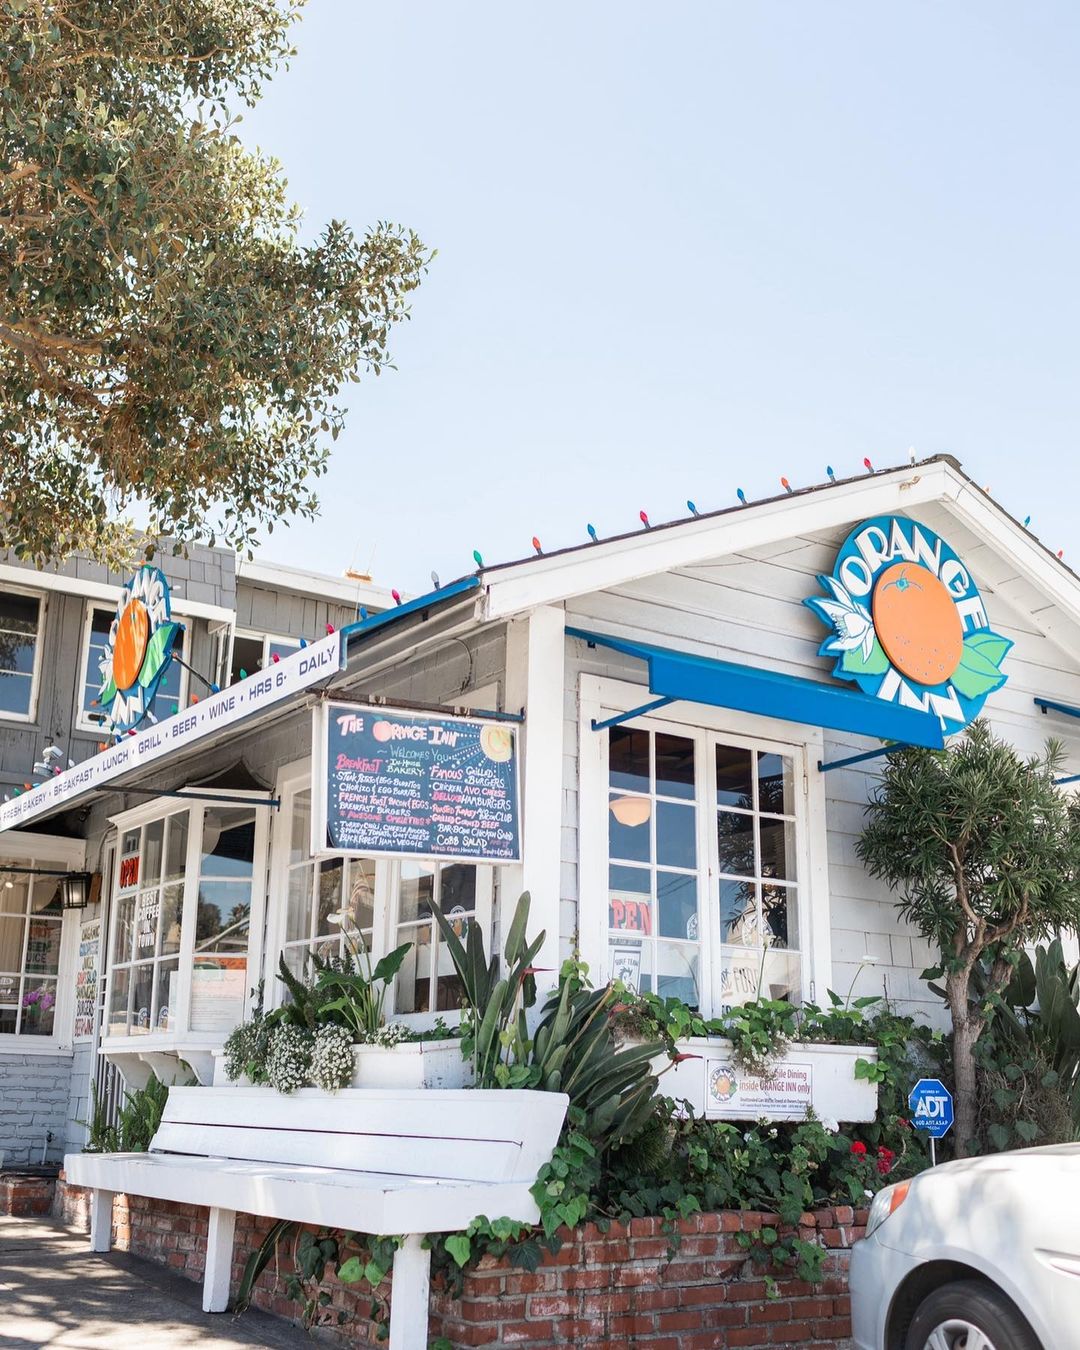 Planning a Budget-Friendly Stay in Laguna Beach